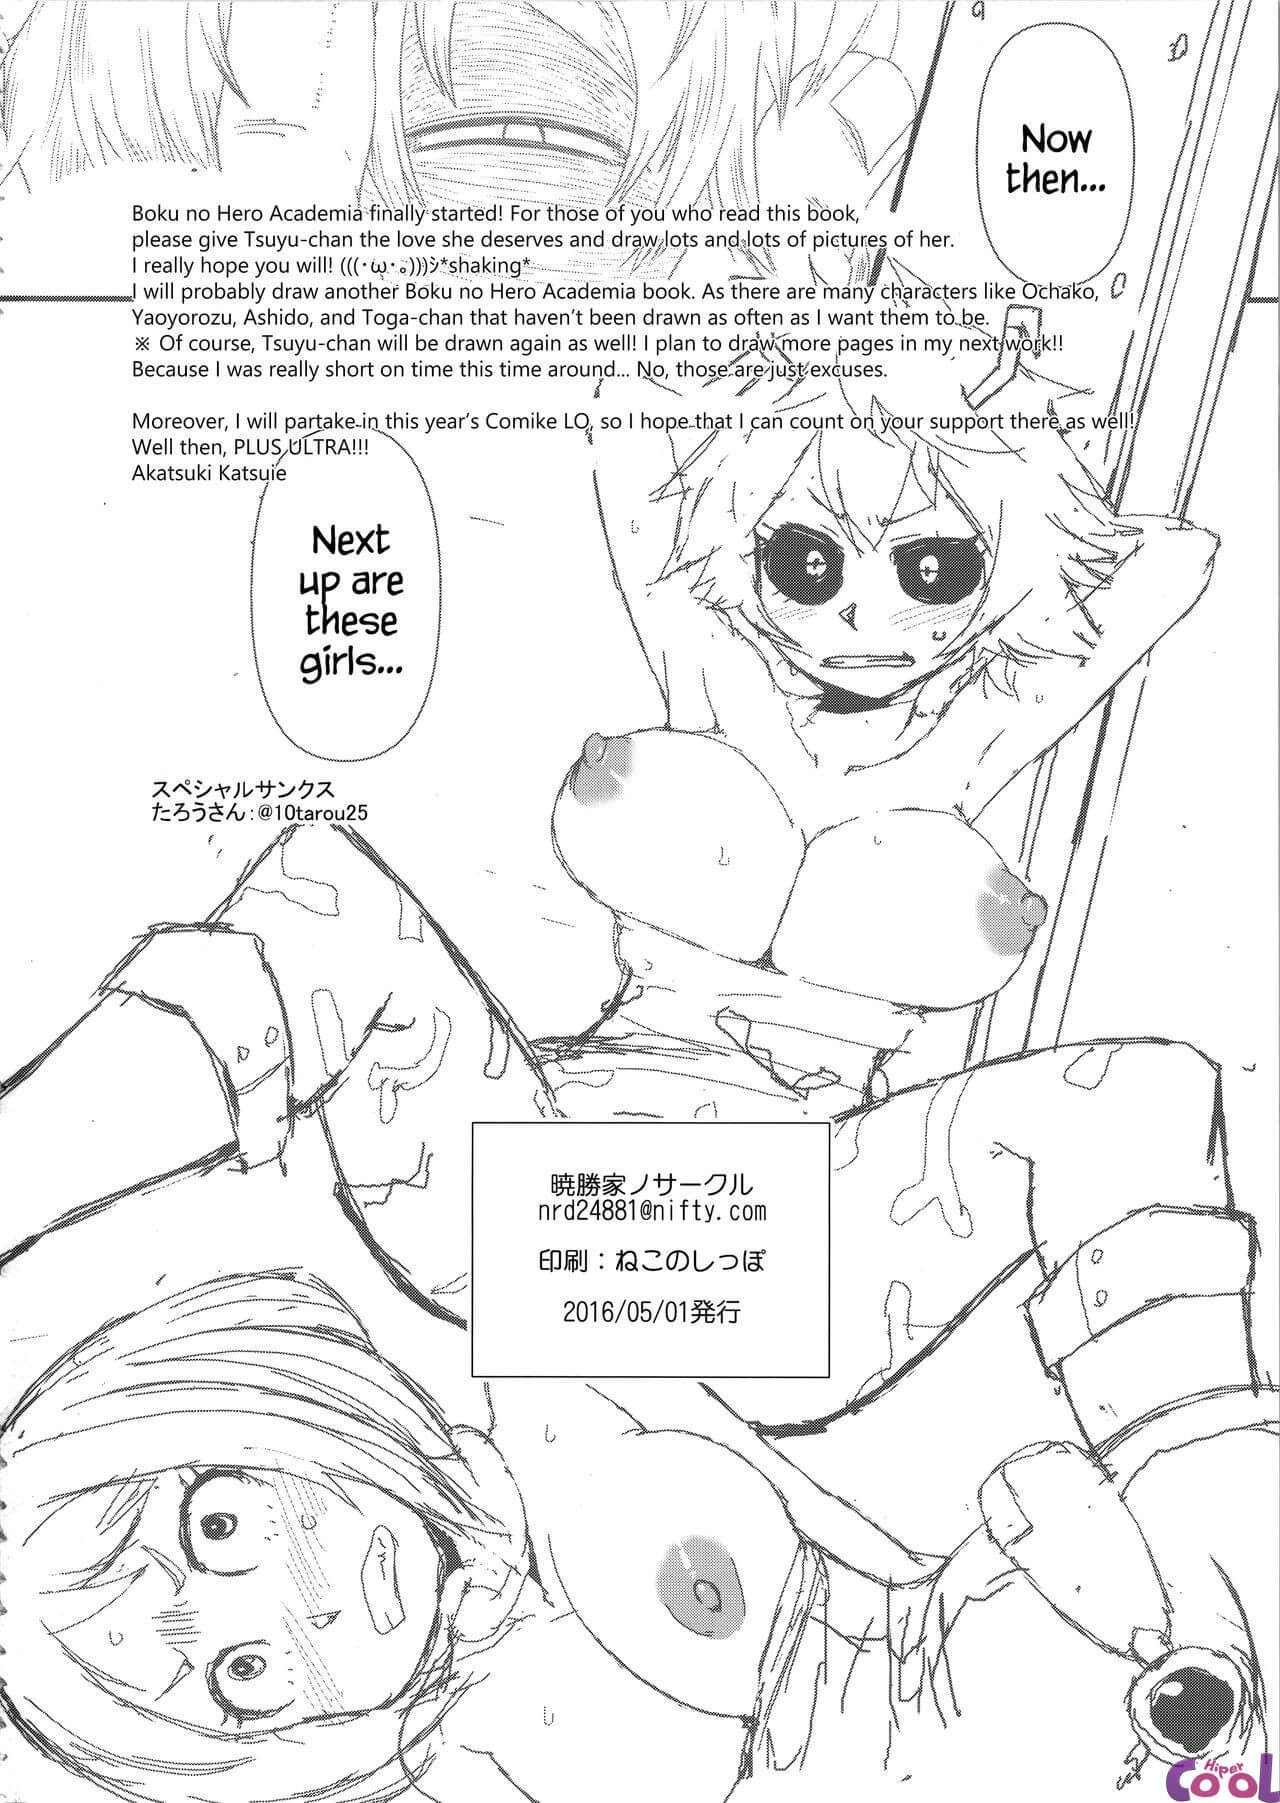 boku-no-dark-hero-academia-chapter-01-page-17.jpg